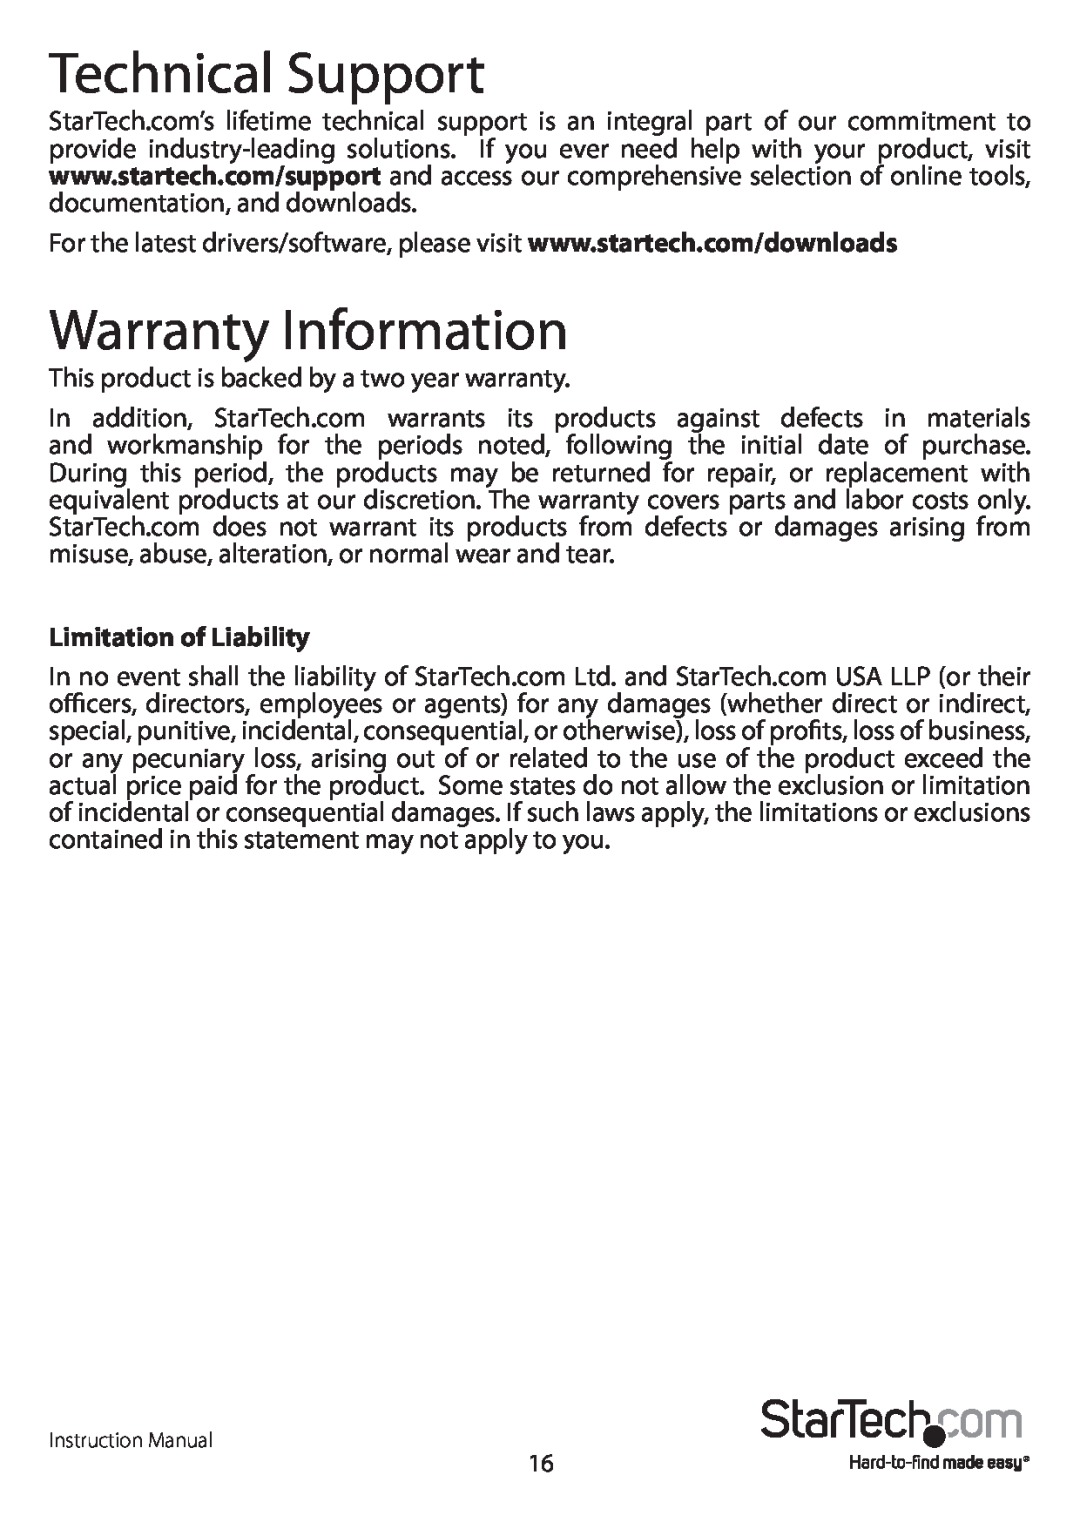 StarTech.com PEXSAT34RH manual Technical Support, Warranty Information, Limitation of Liability 